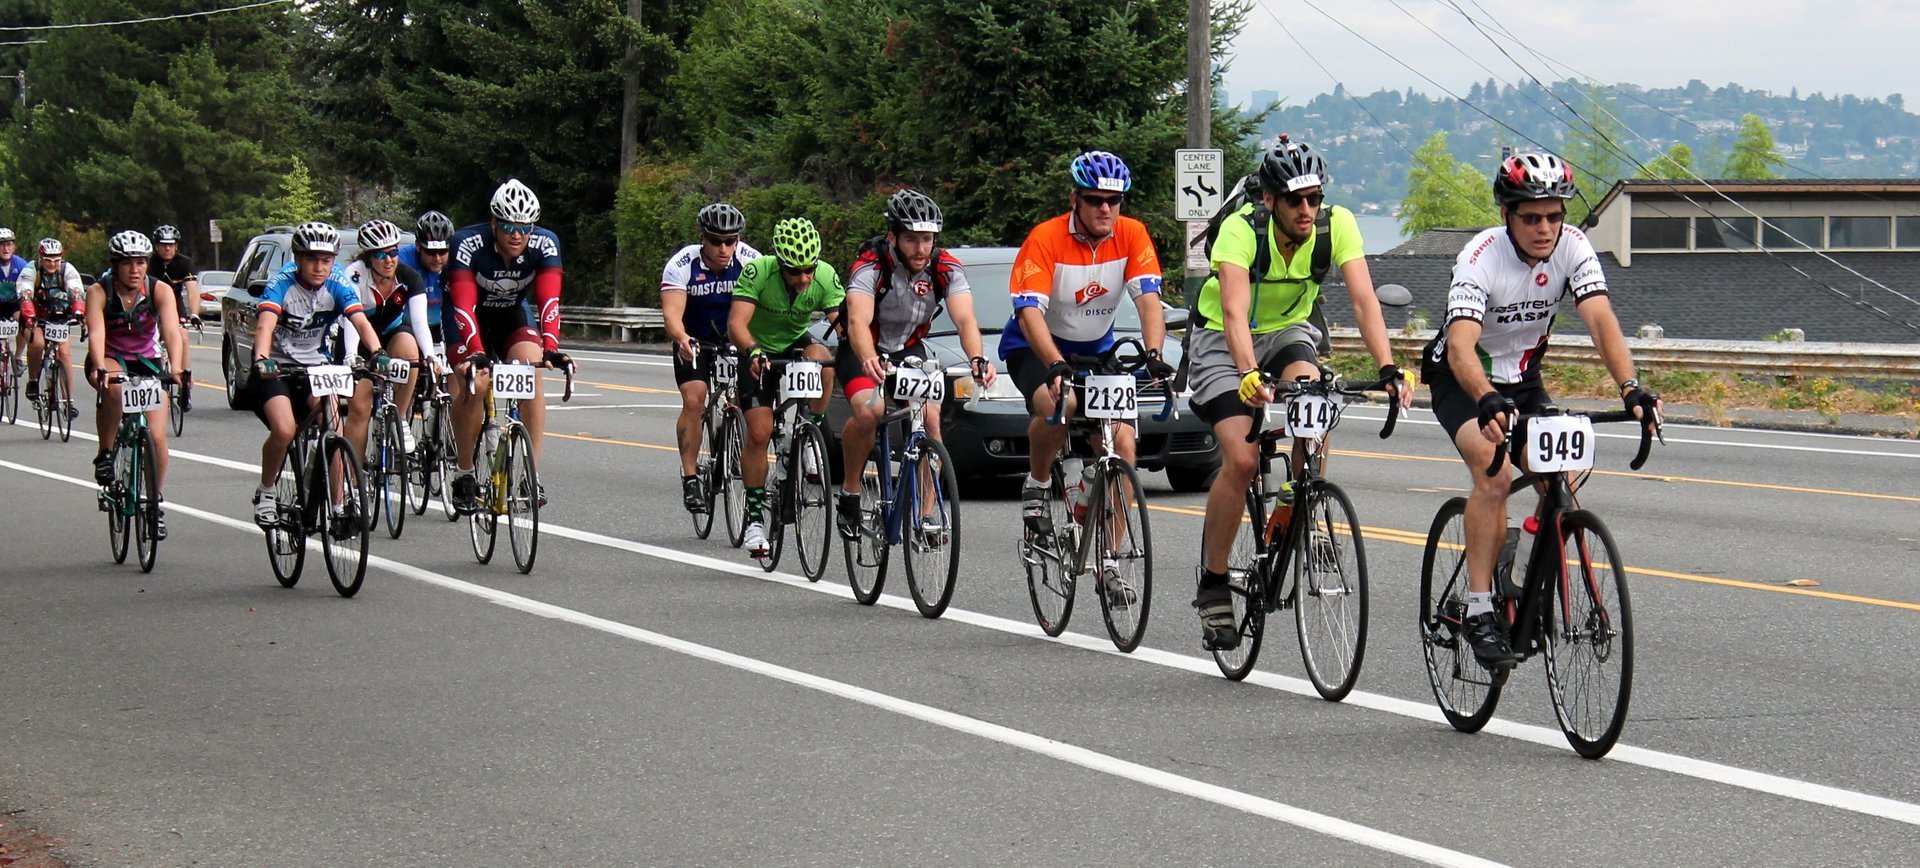 Seattle to Portland Bicycle Classic - Wikipedia